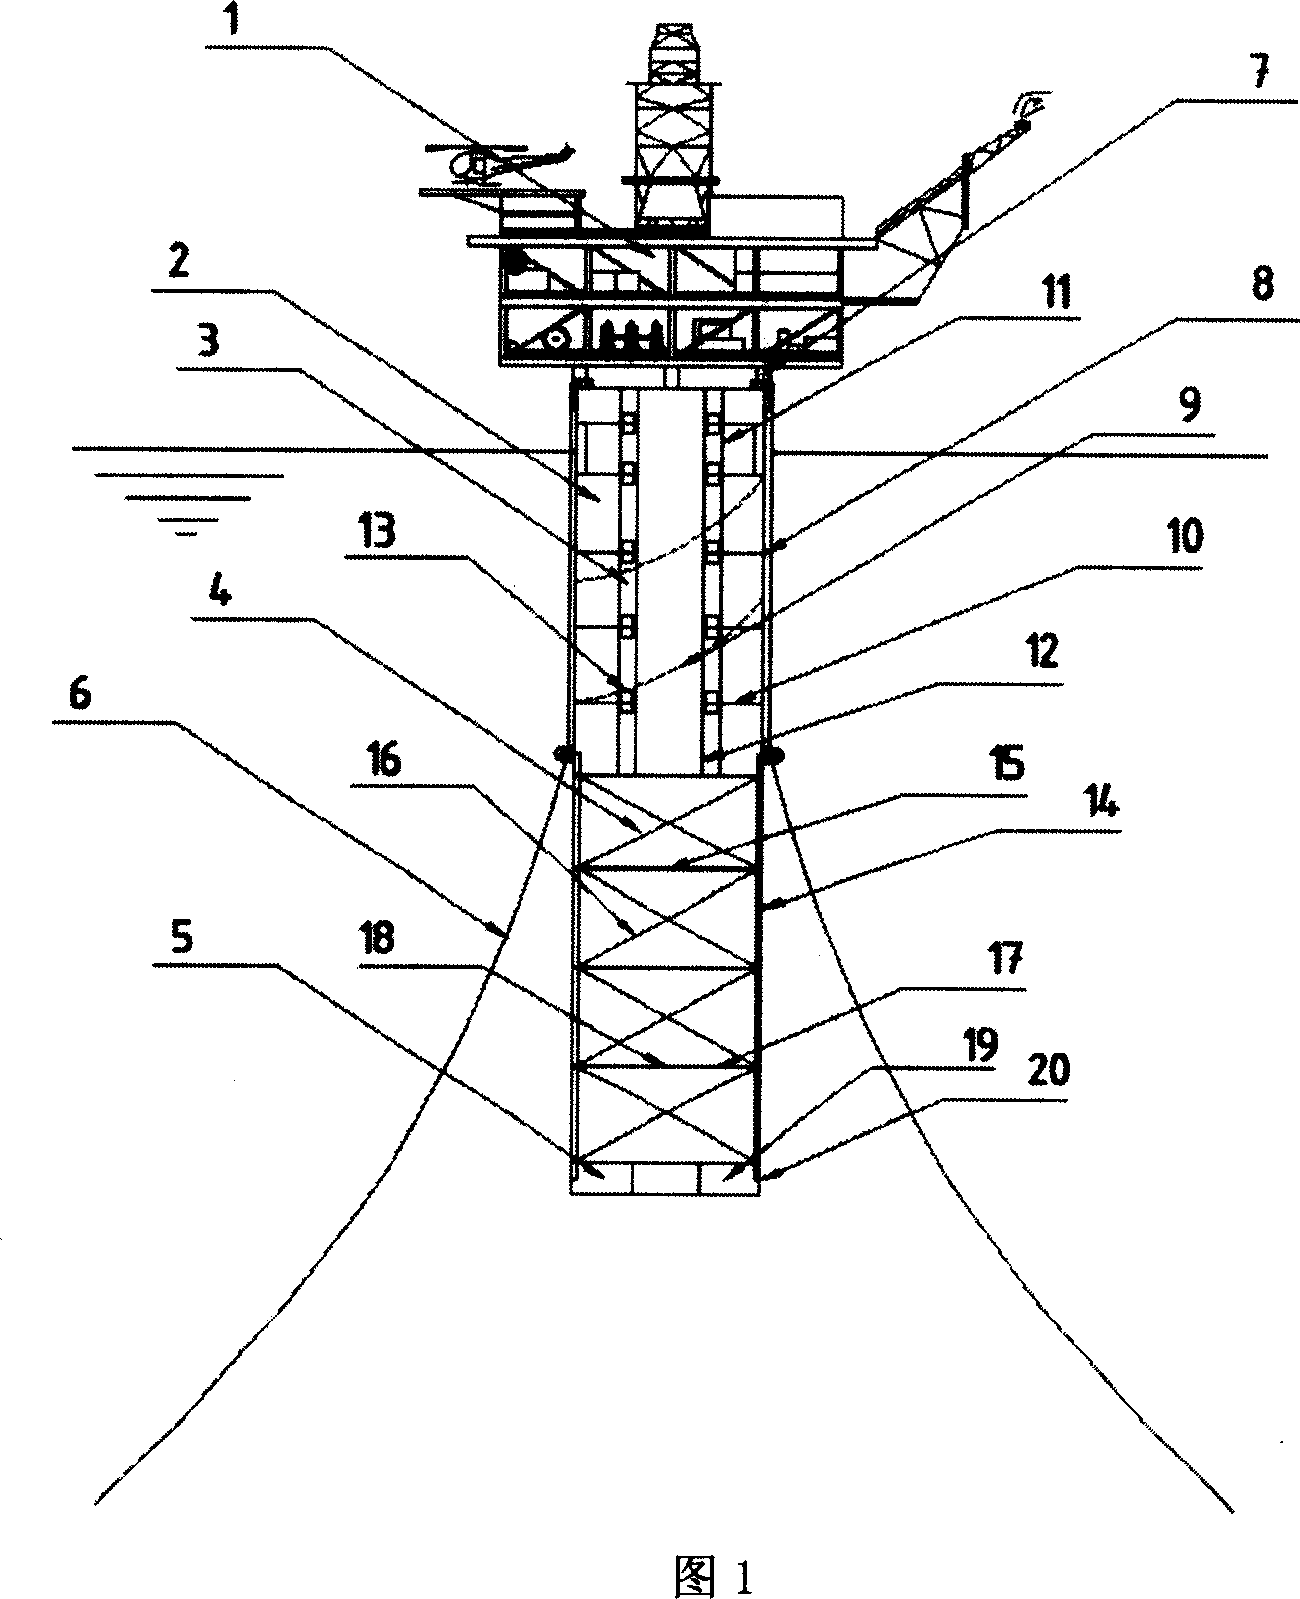 Multiple column truss type spar platform with central well